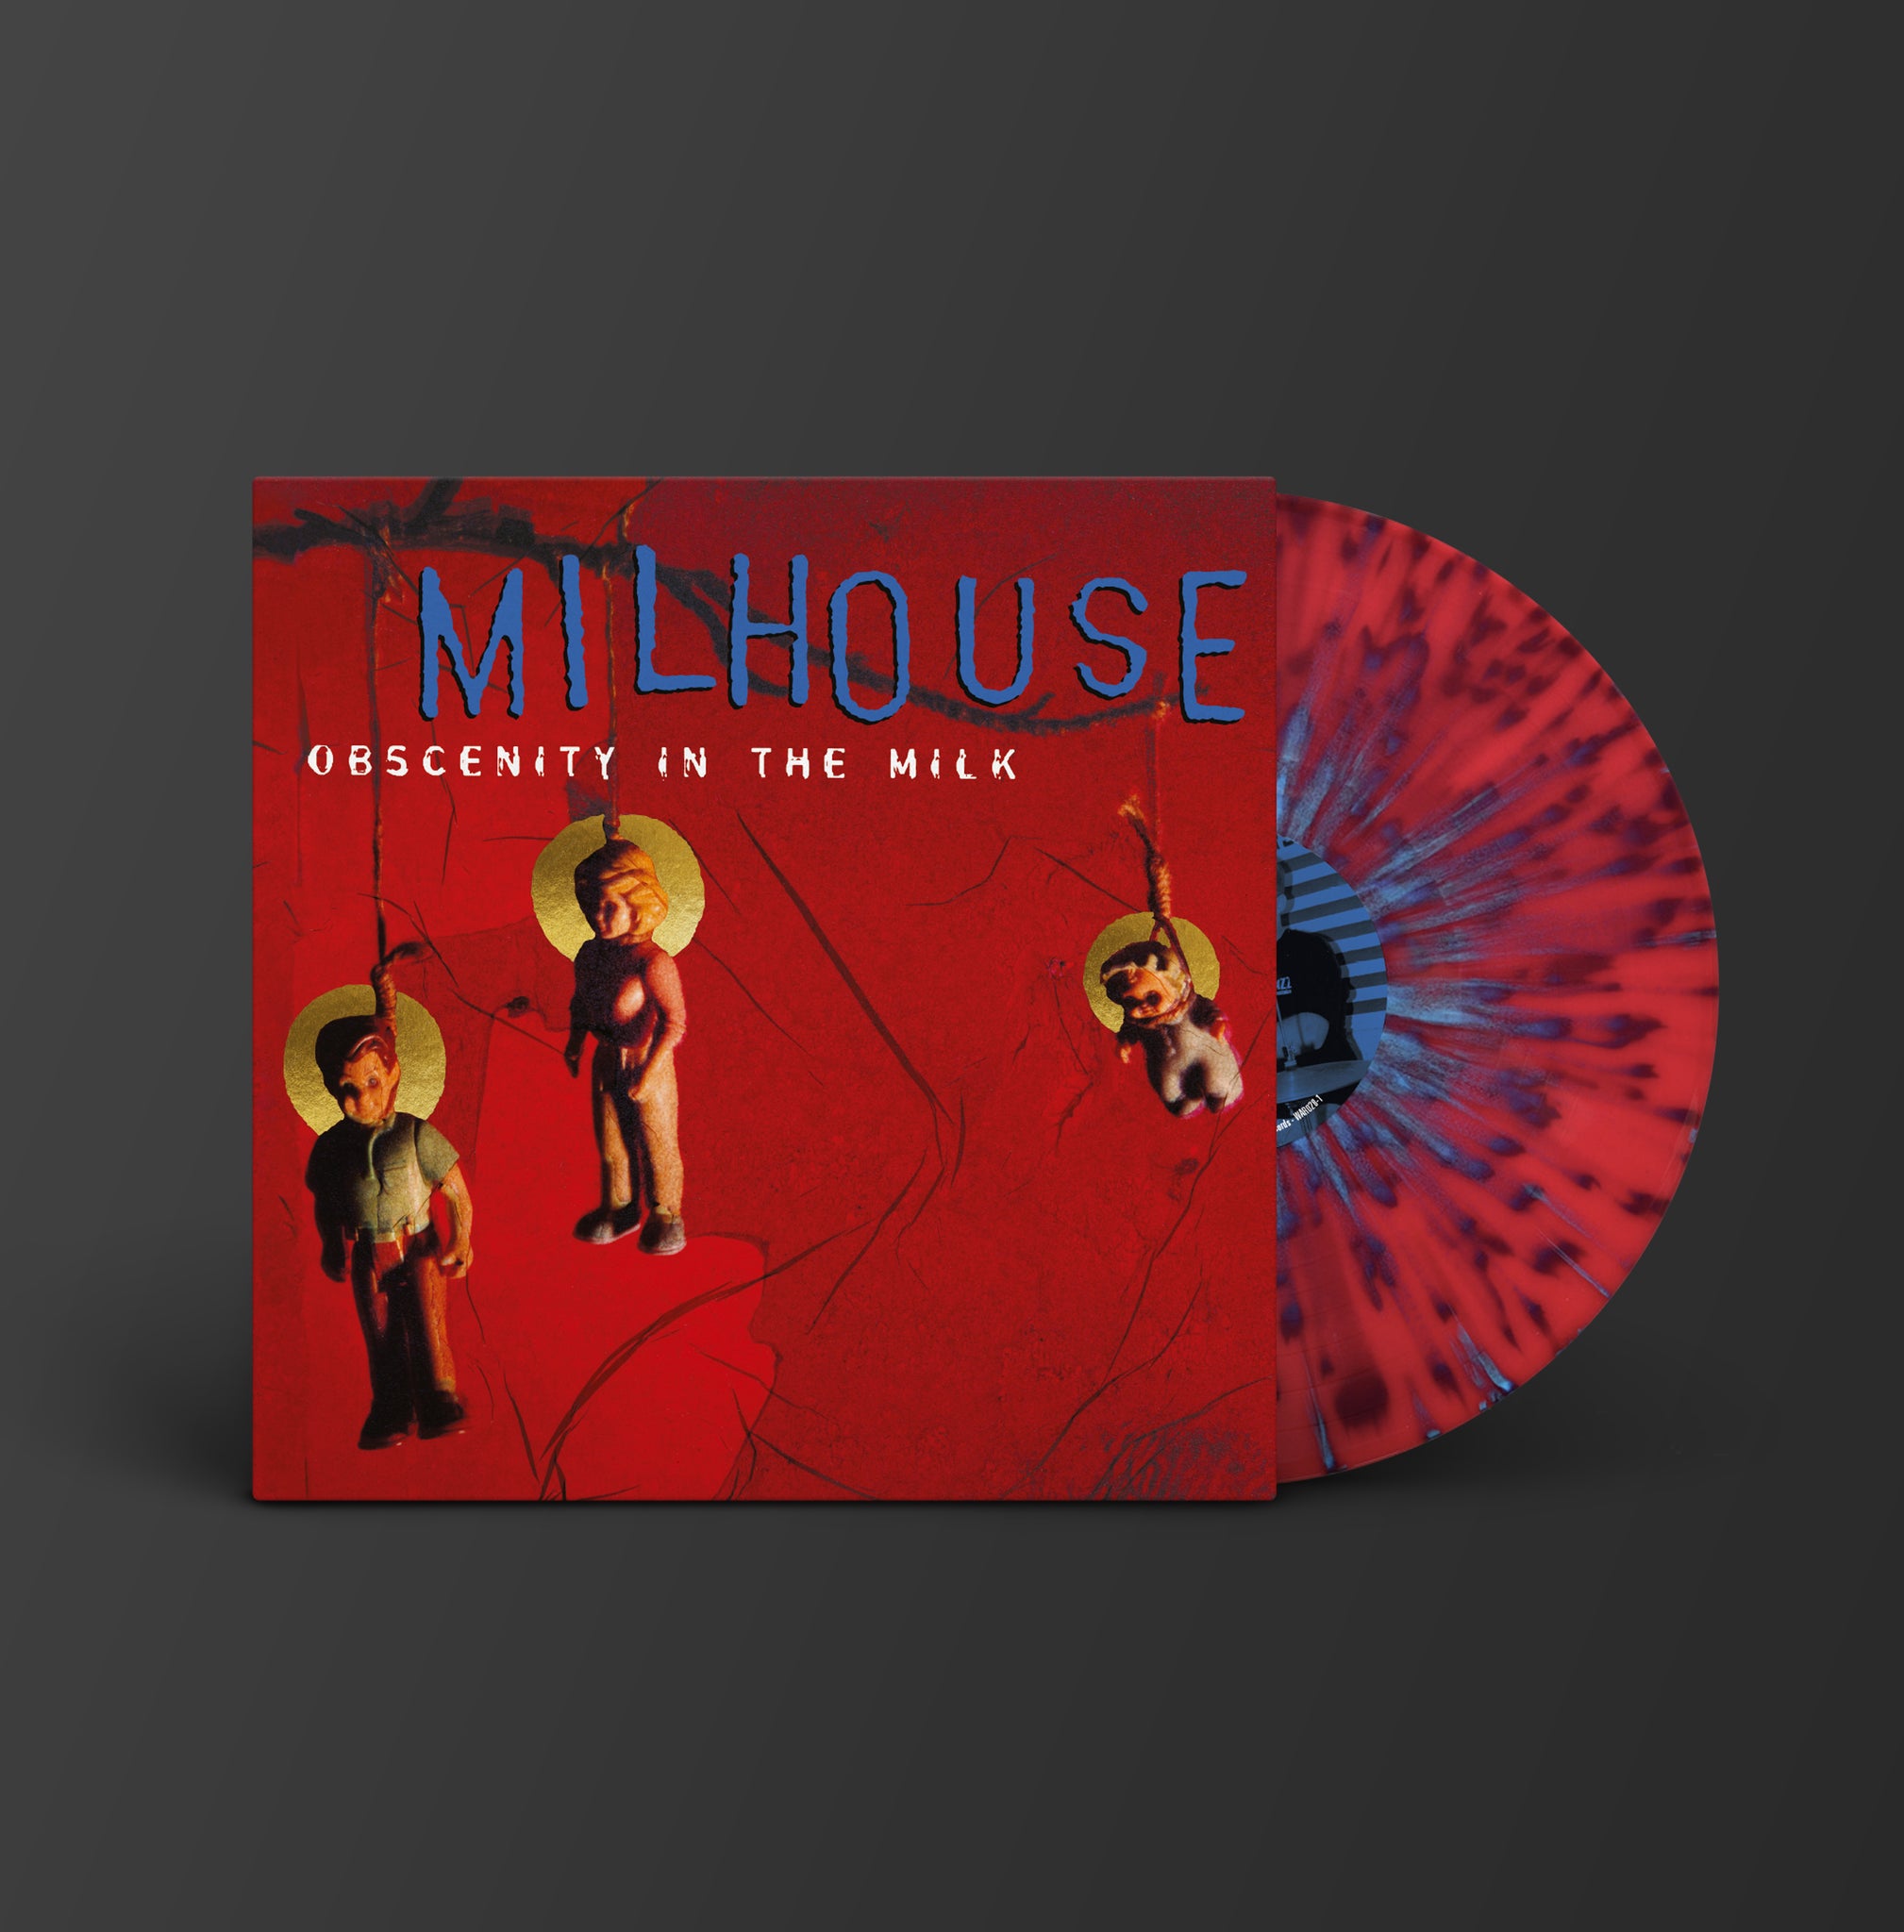 Milhouse - "Obscenity in the Milk" 25th Anniversary Remaster